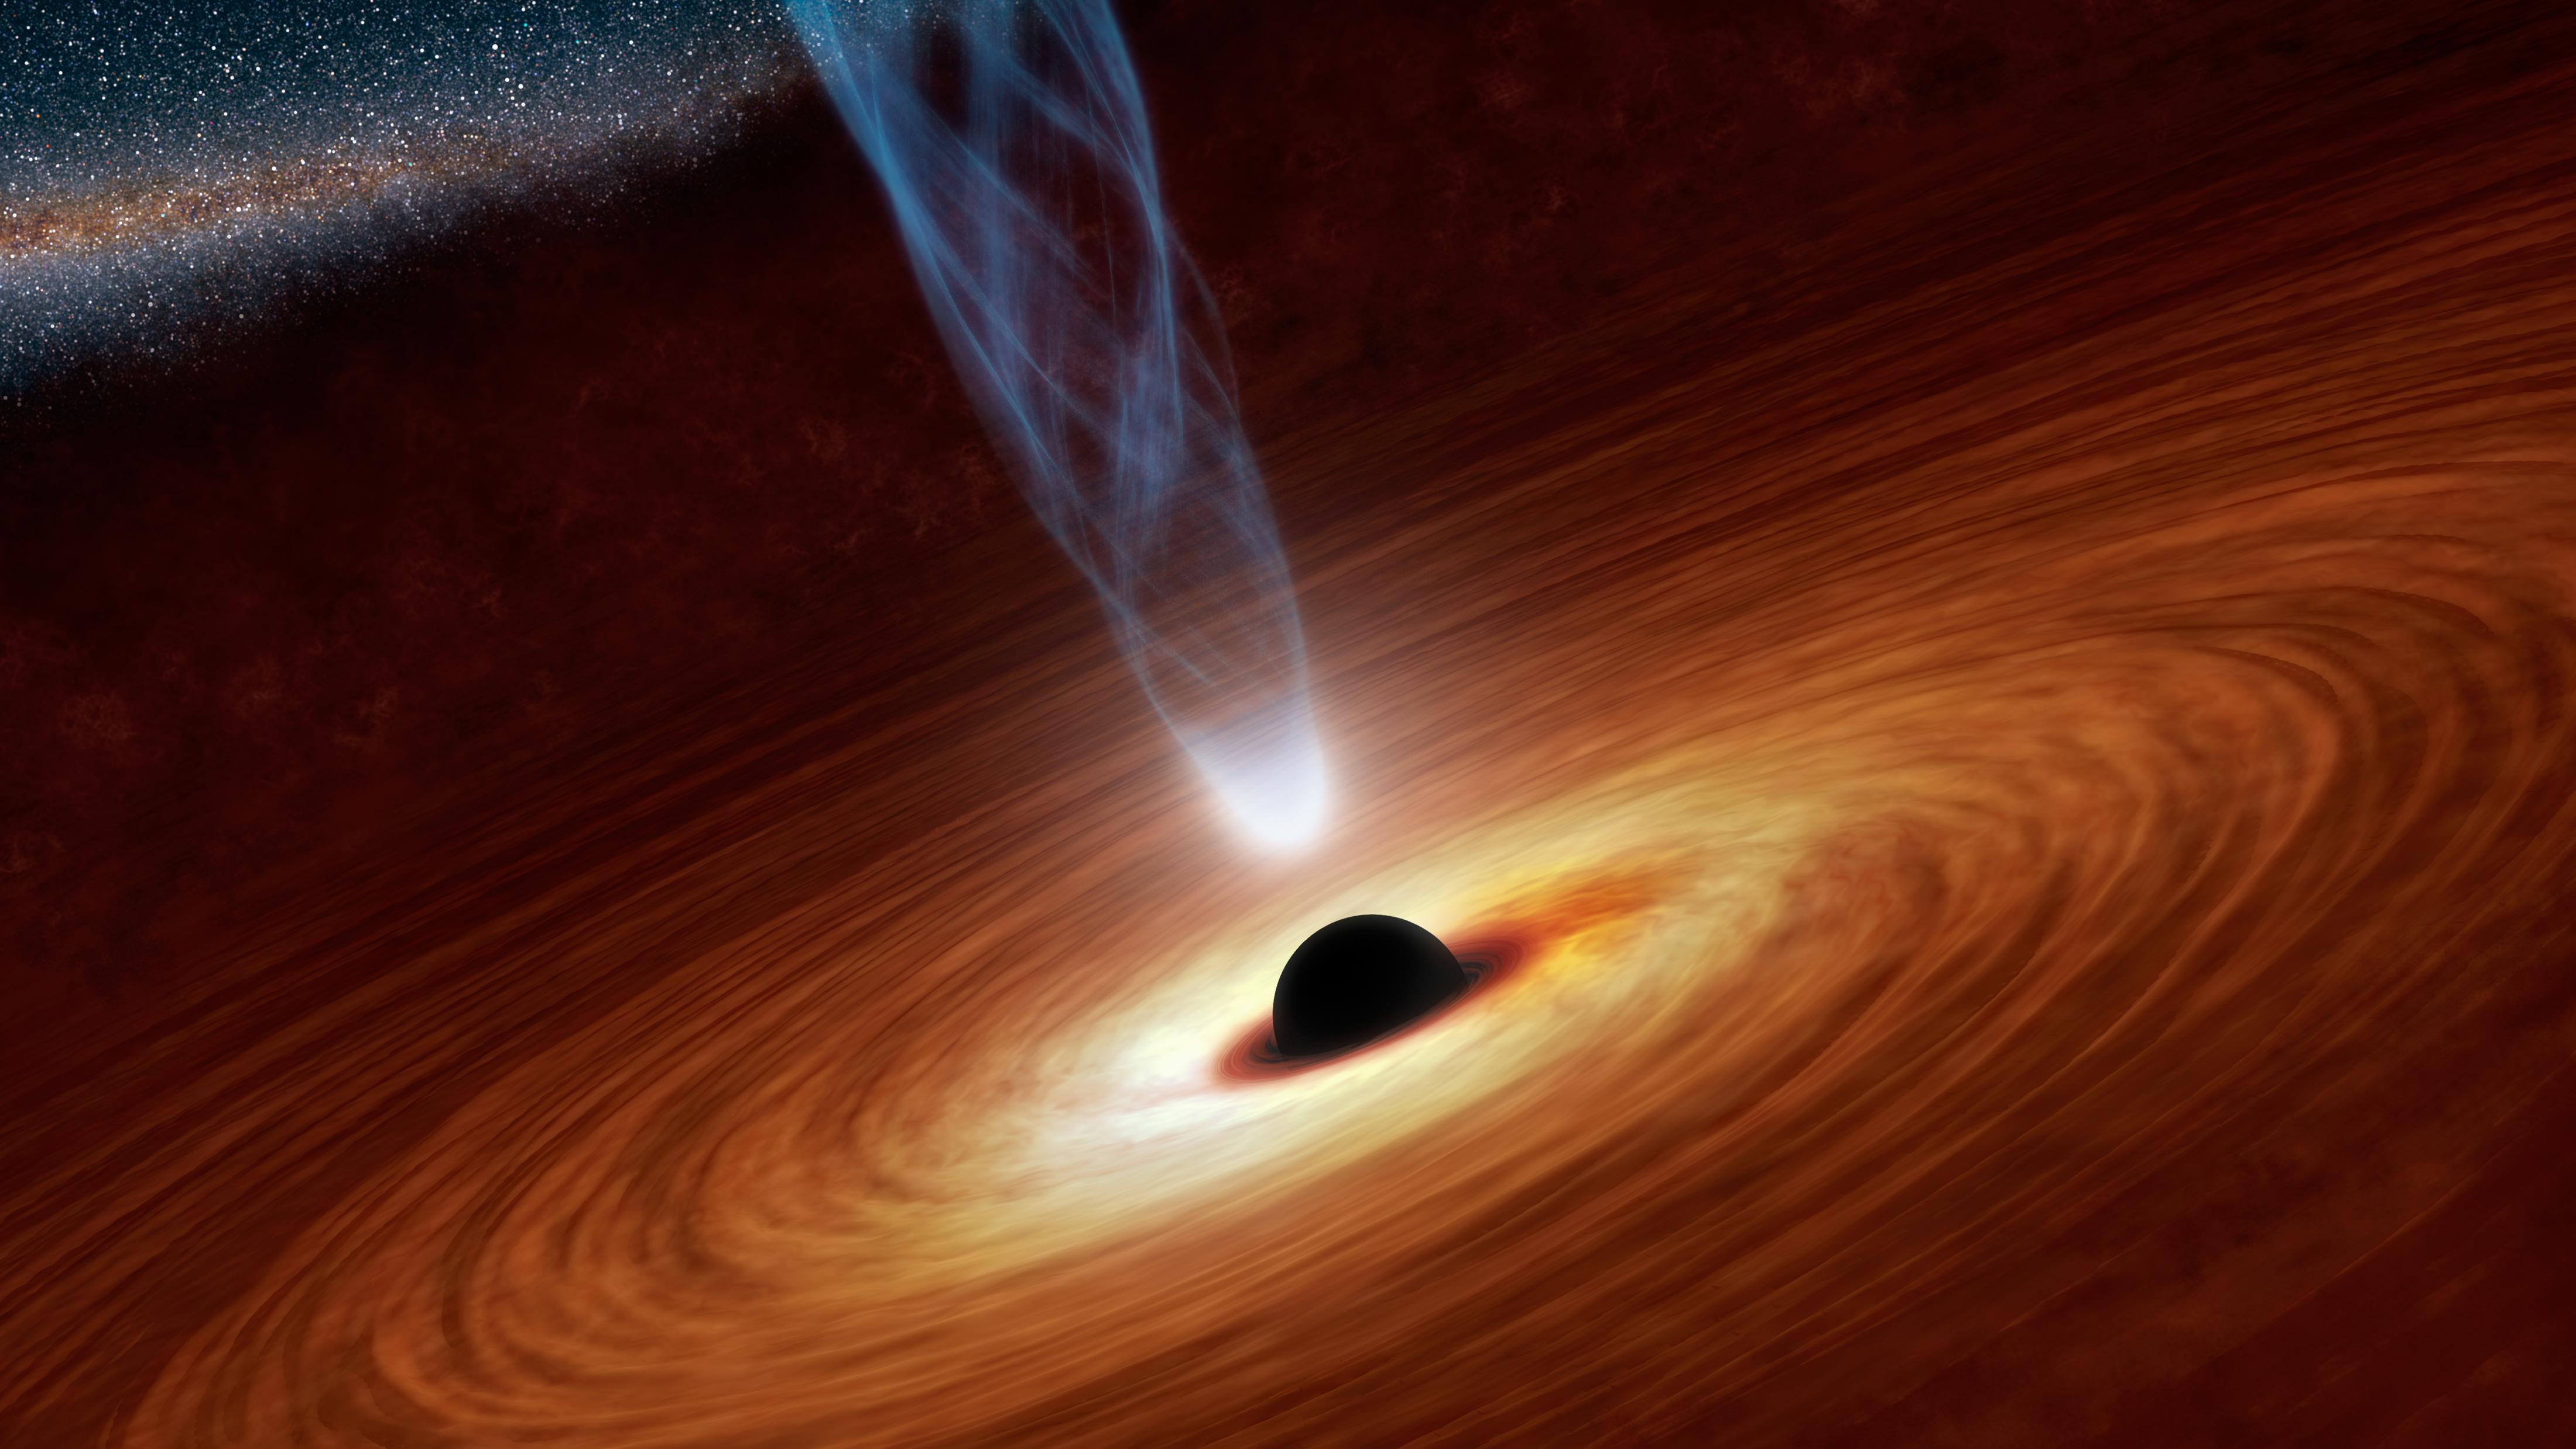 black hole spin courtesy of nasa-jpl-caltech